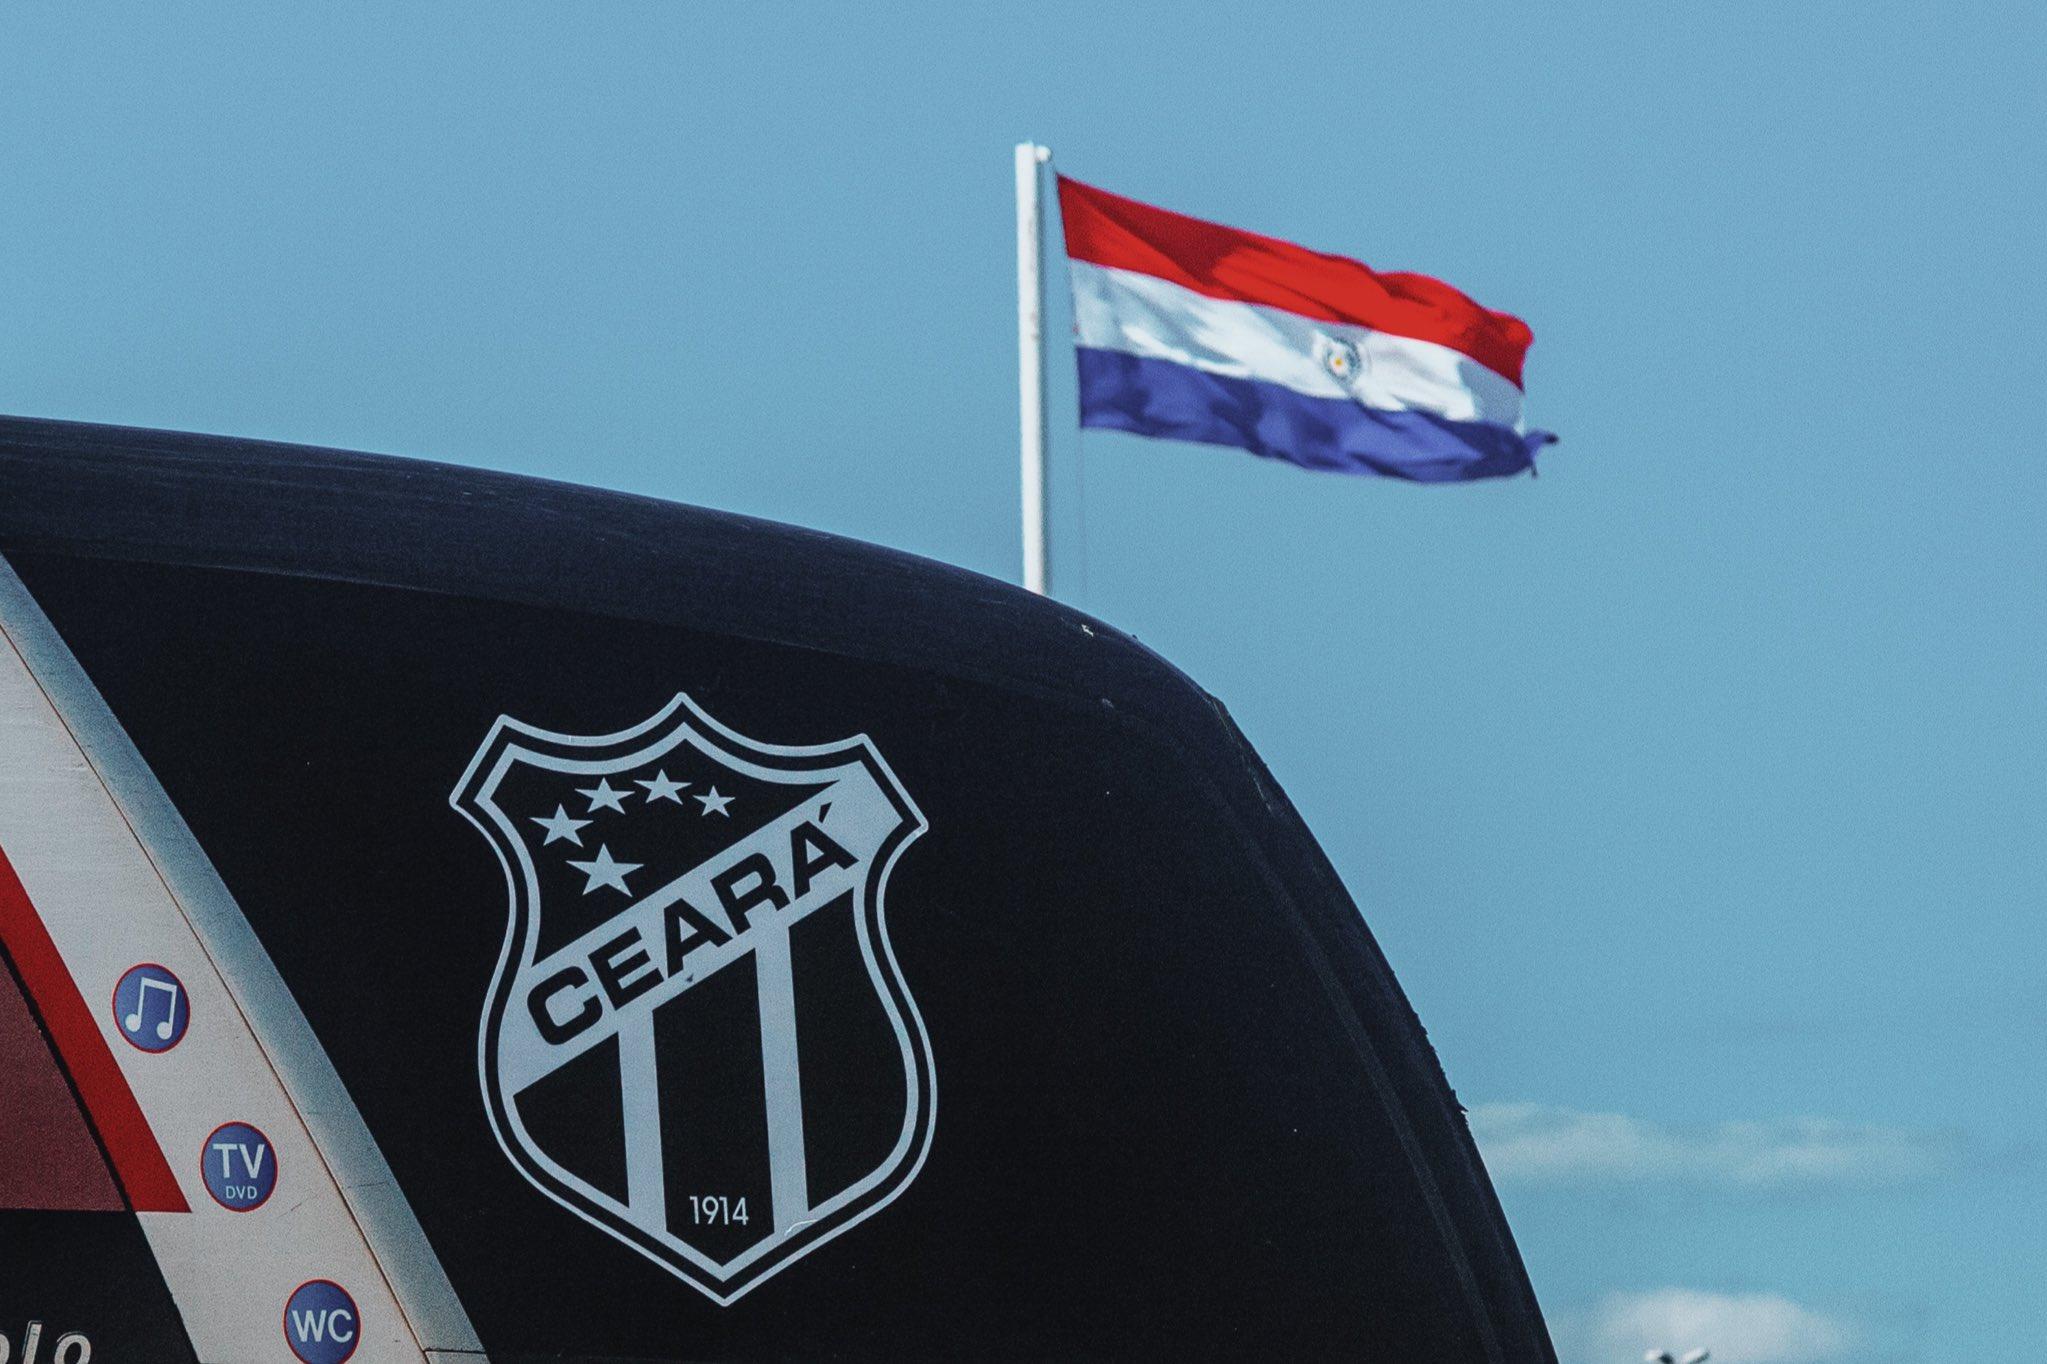 Escudo do Ceará na frente da bandeira do Paraguai